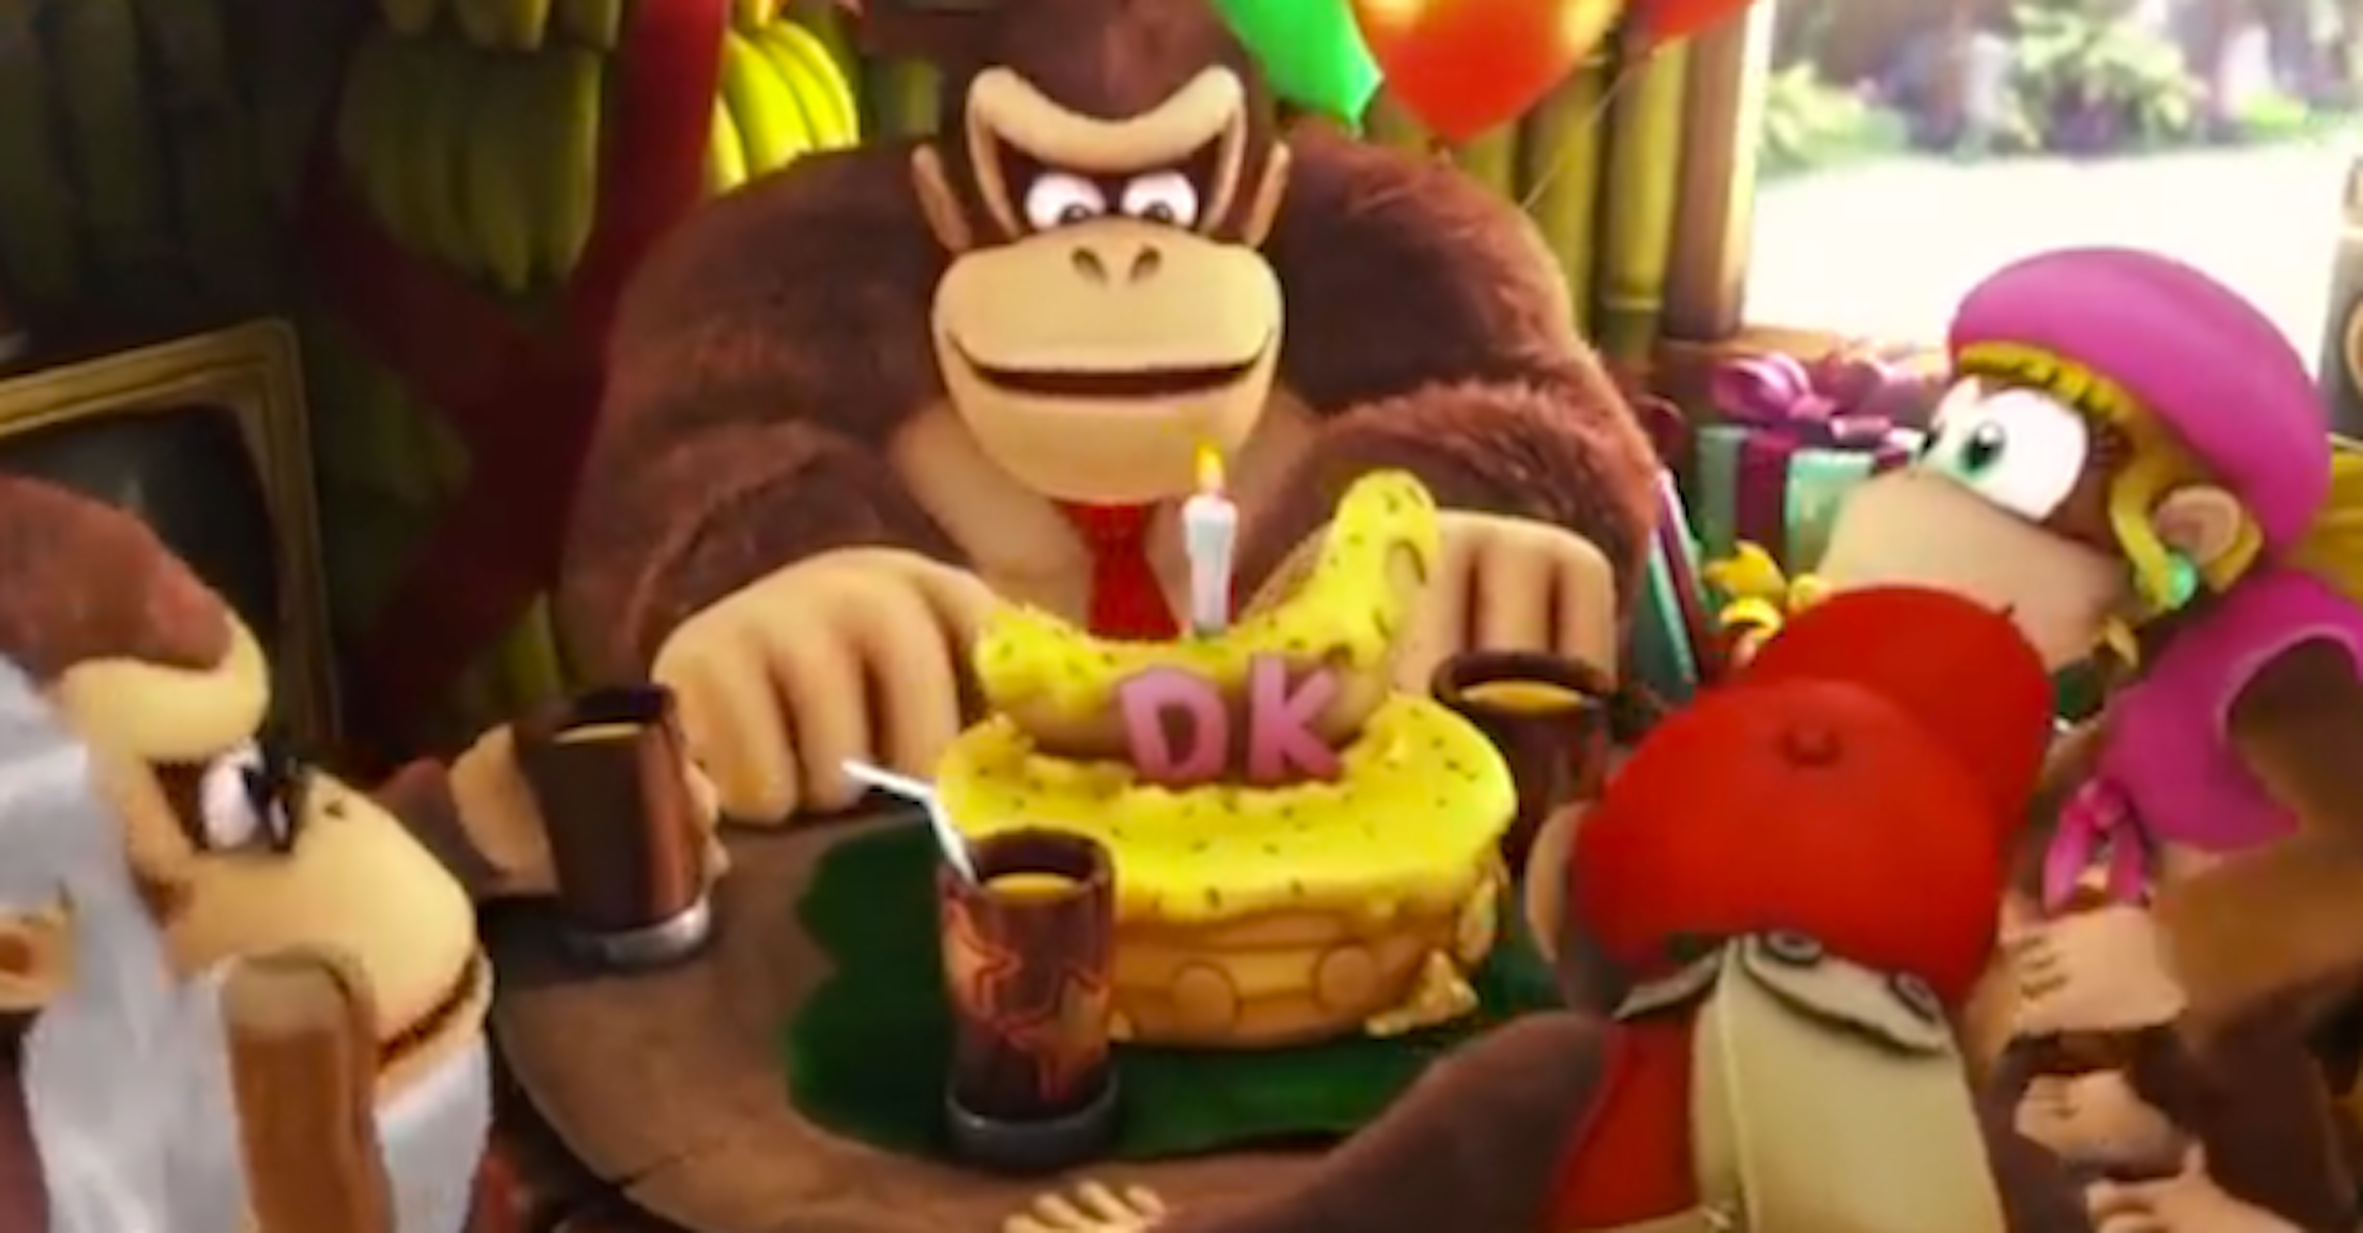 Gaming Recipes: Donkey Kong Cake